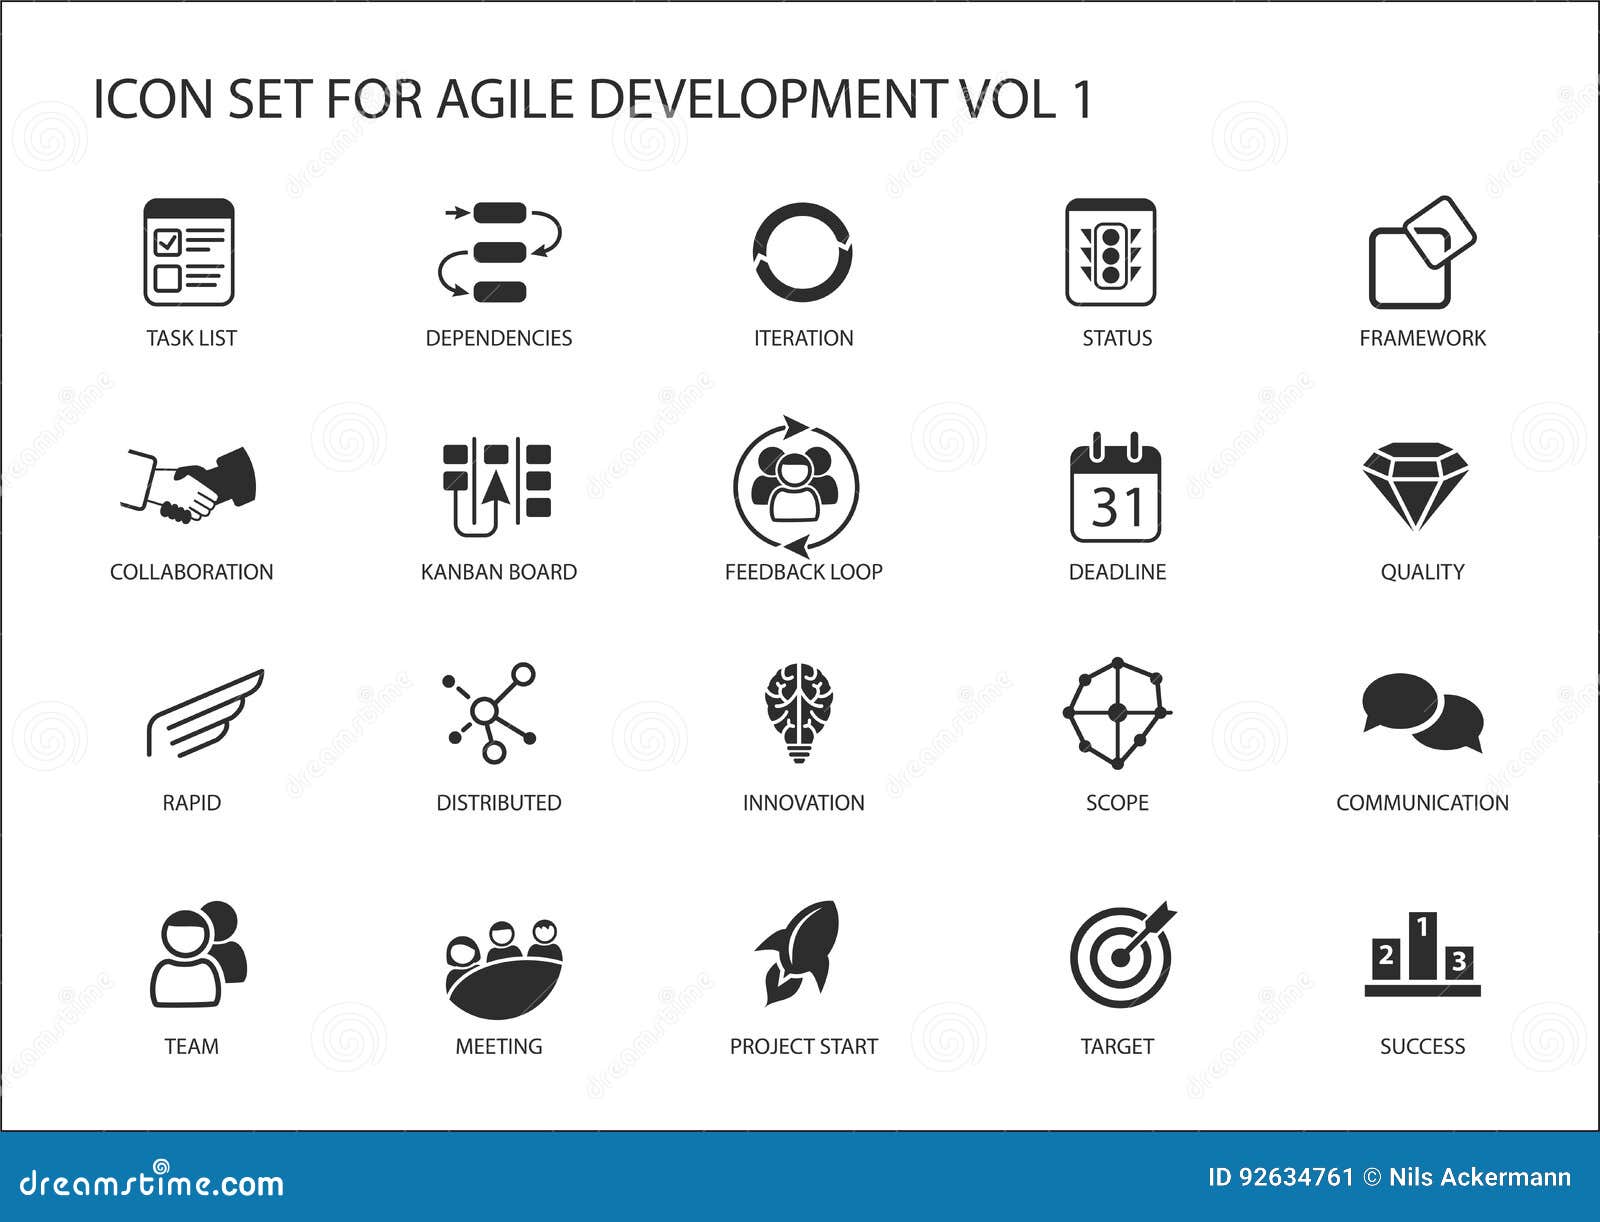 agile software development icon set